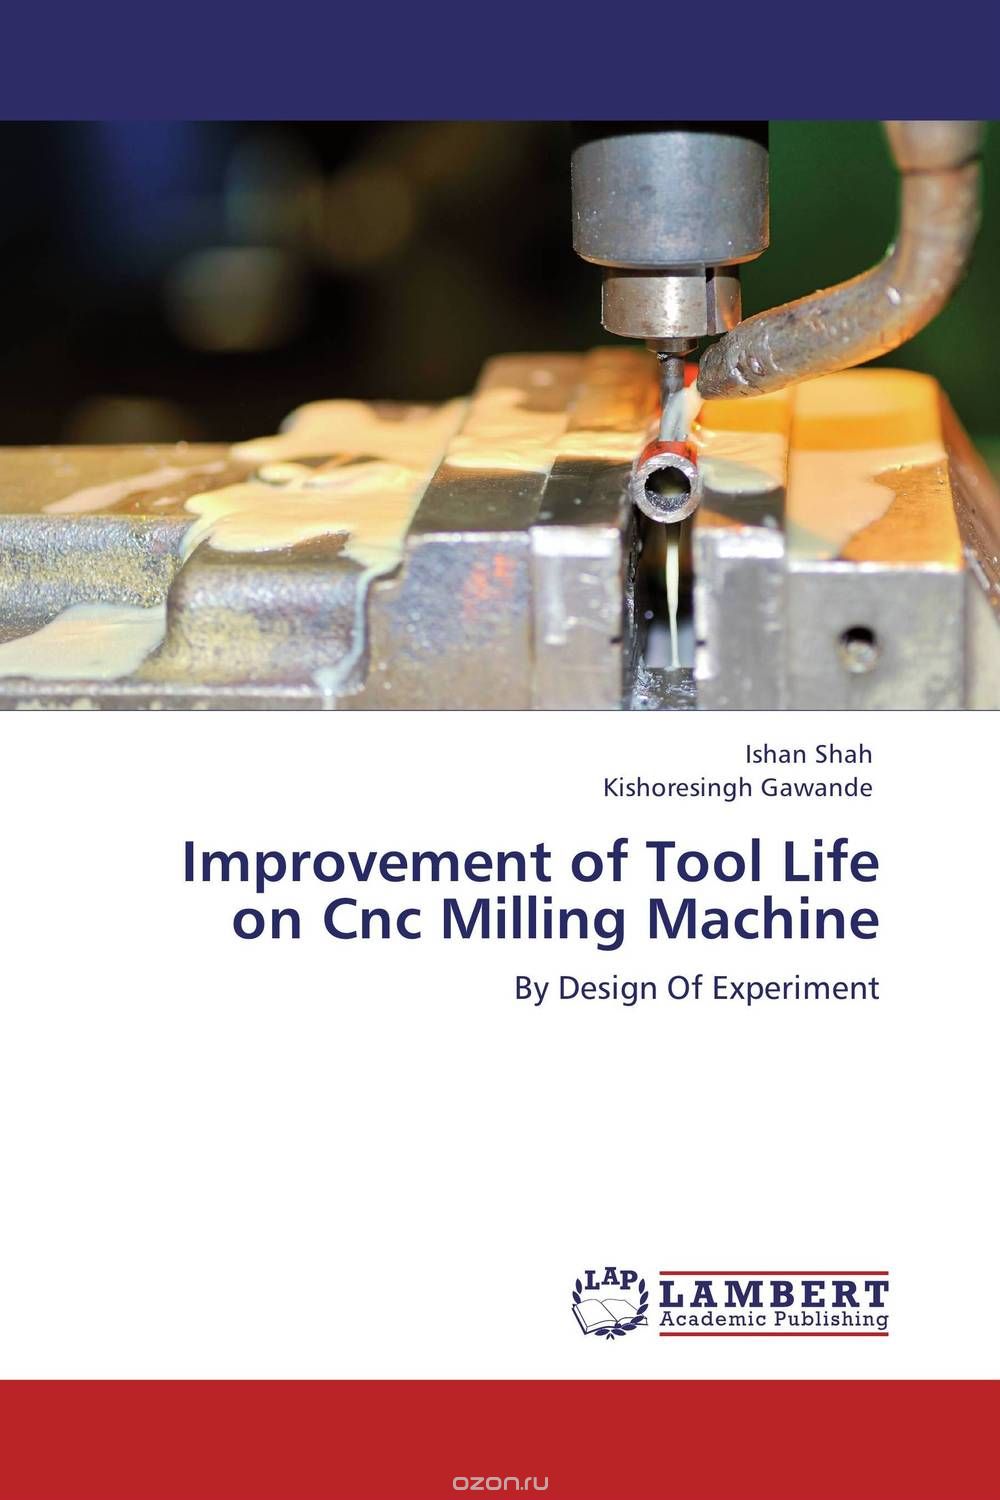 Скачать книгу "Improvement of Tool Life on Cnc Milling Machine"